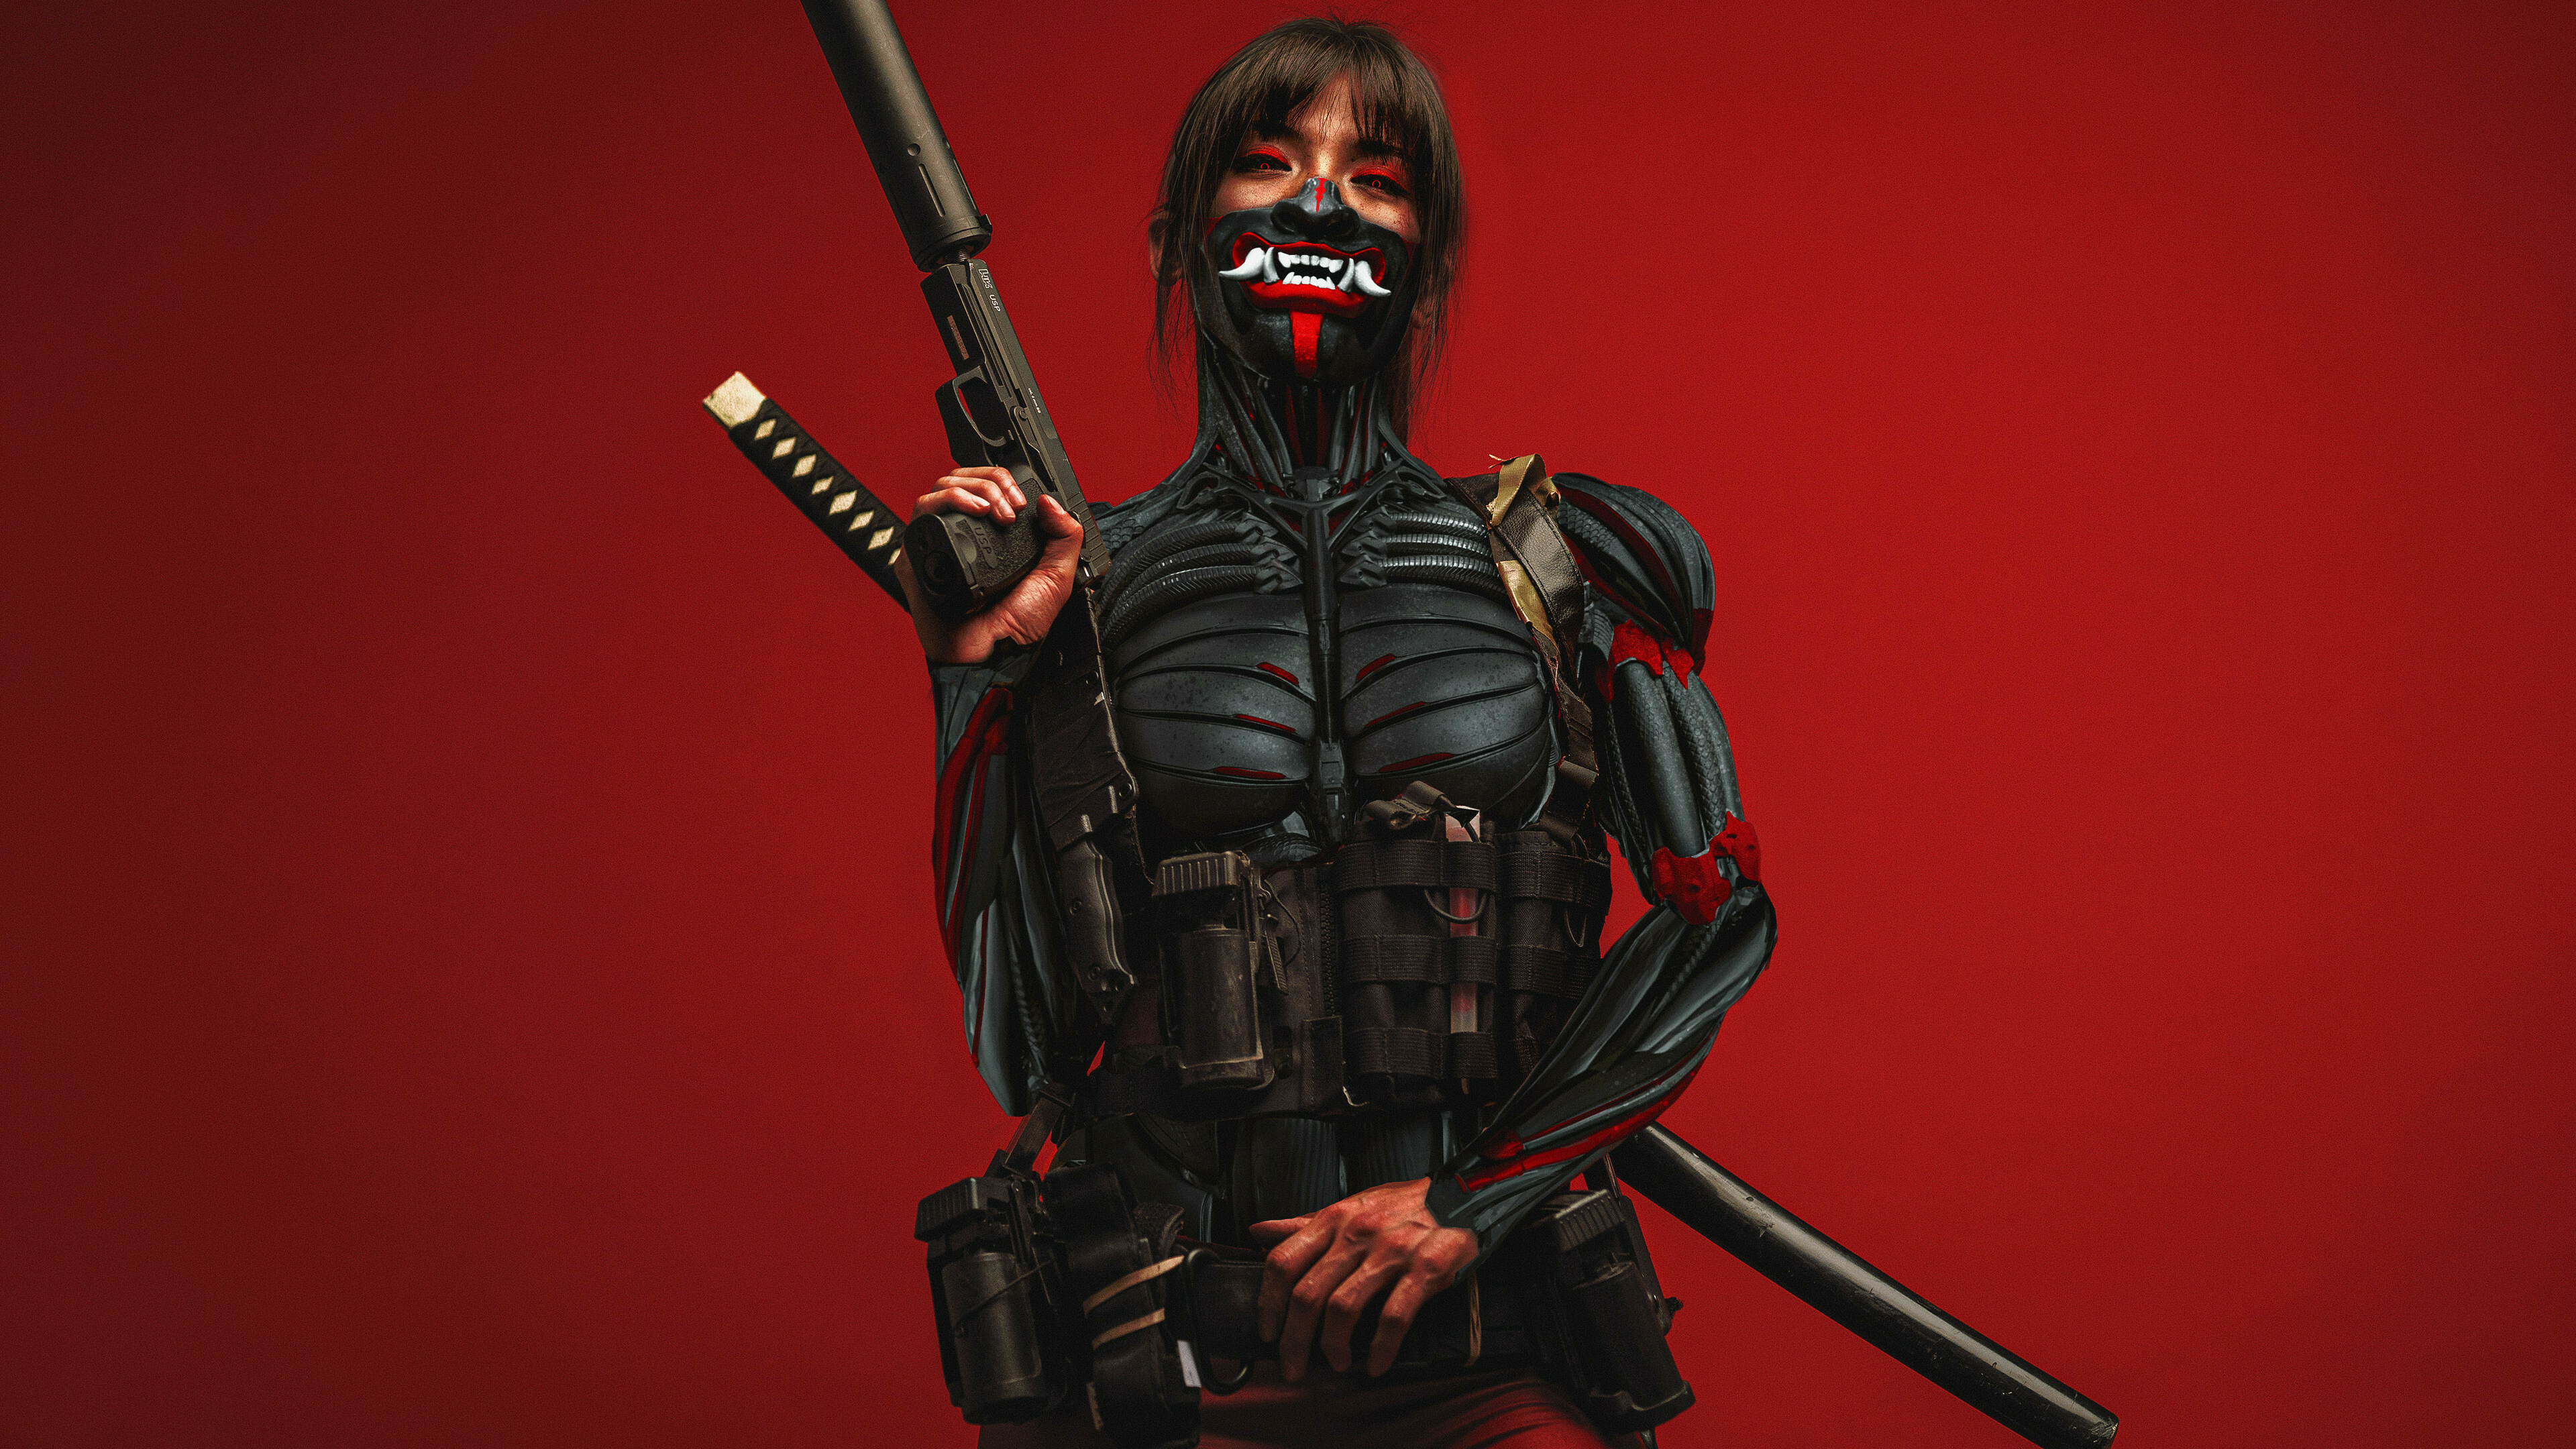 Cyberpunk ninja, with katana & gun, art, 3840x2160 wallpaper